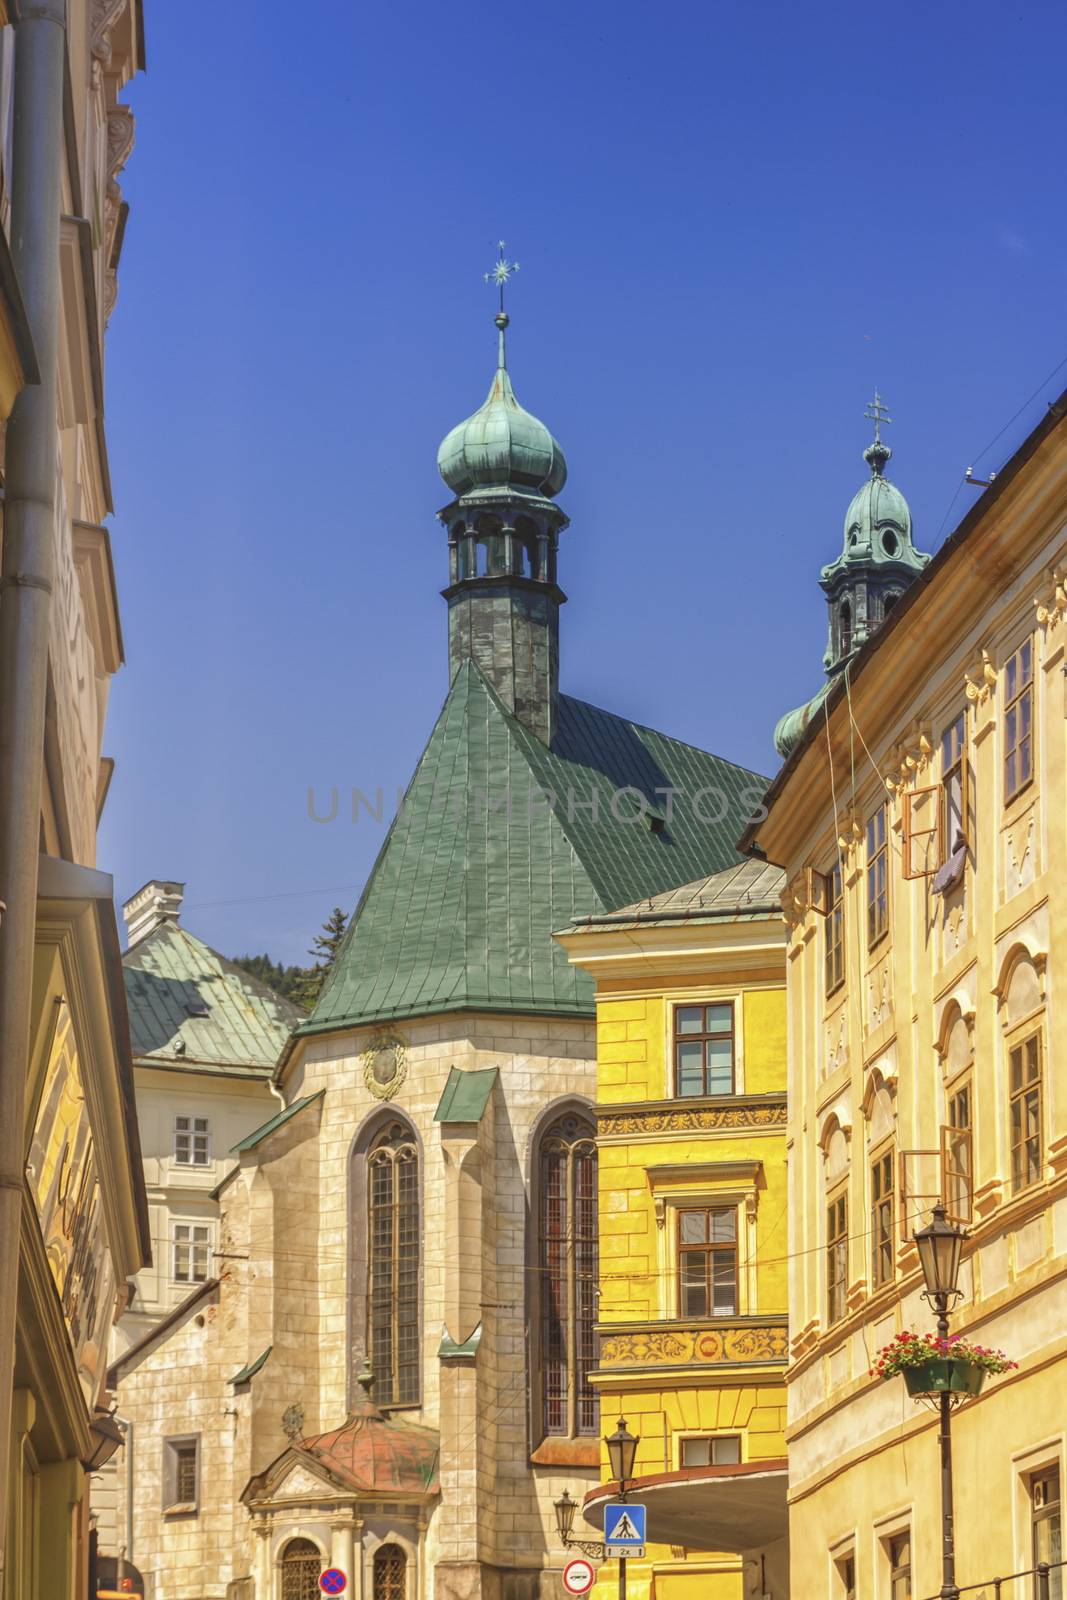 Town-hall, Saint Katharine church towers and building in Banska Stiavnica, Slovakia by Elenaphotos21